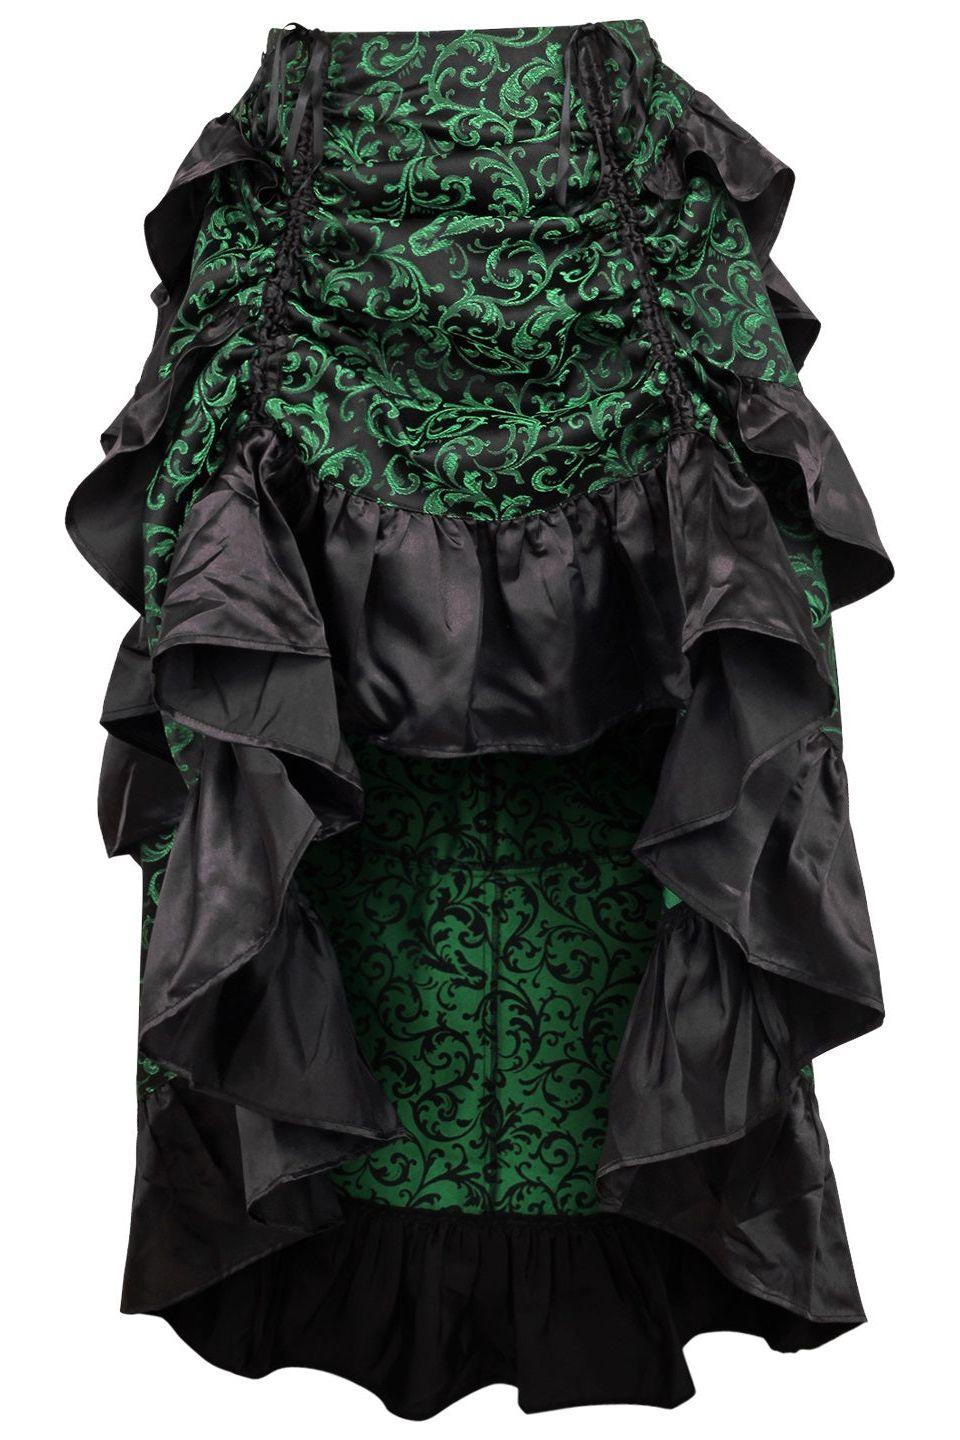 Green/Black Brocade Adjustable High Low Bustle Skirt - AMIClubwear